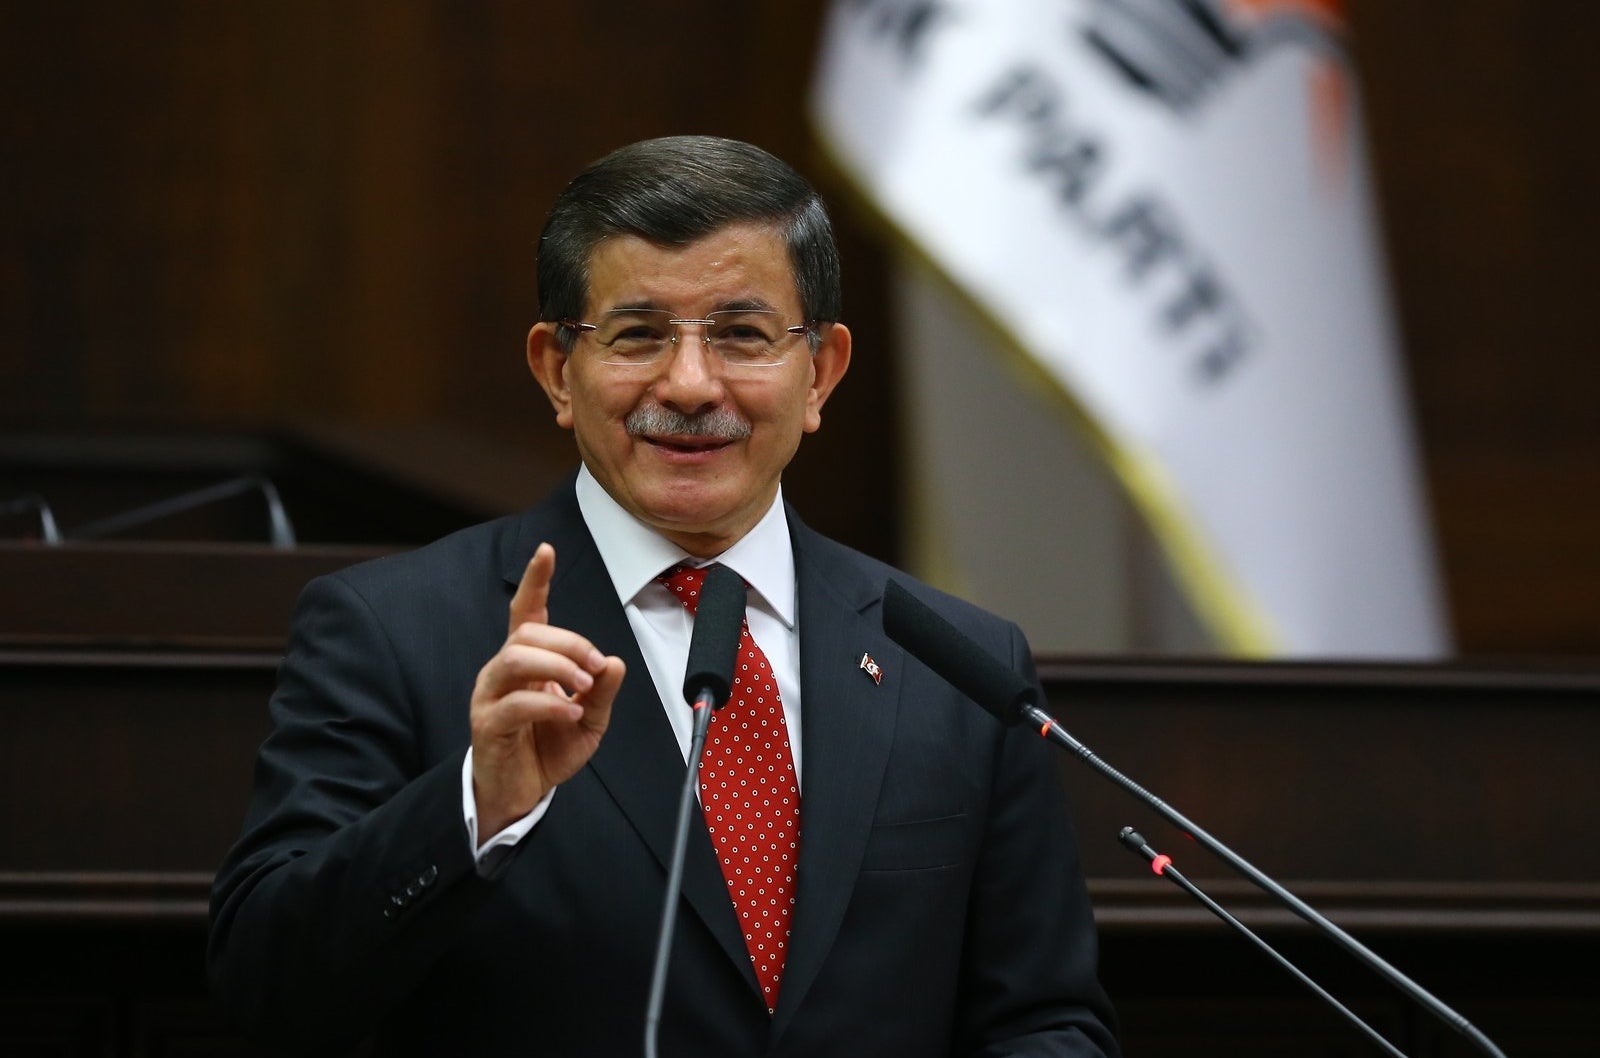 Turkish Prime Minister Ahmet Davutoğlu